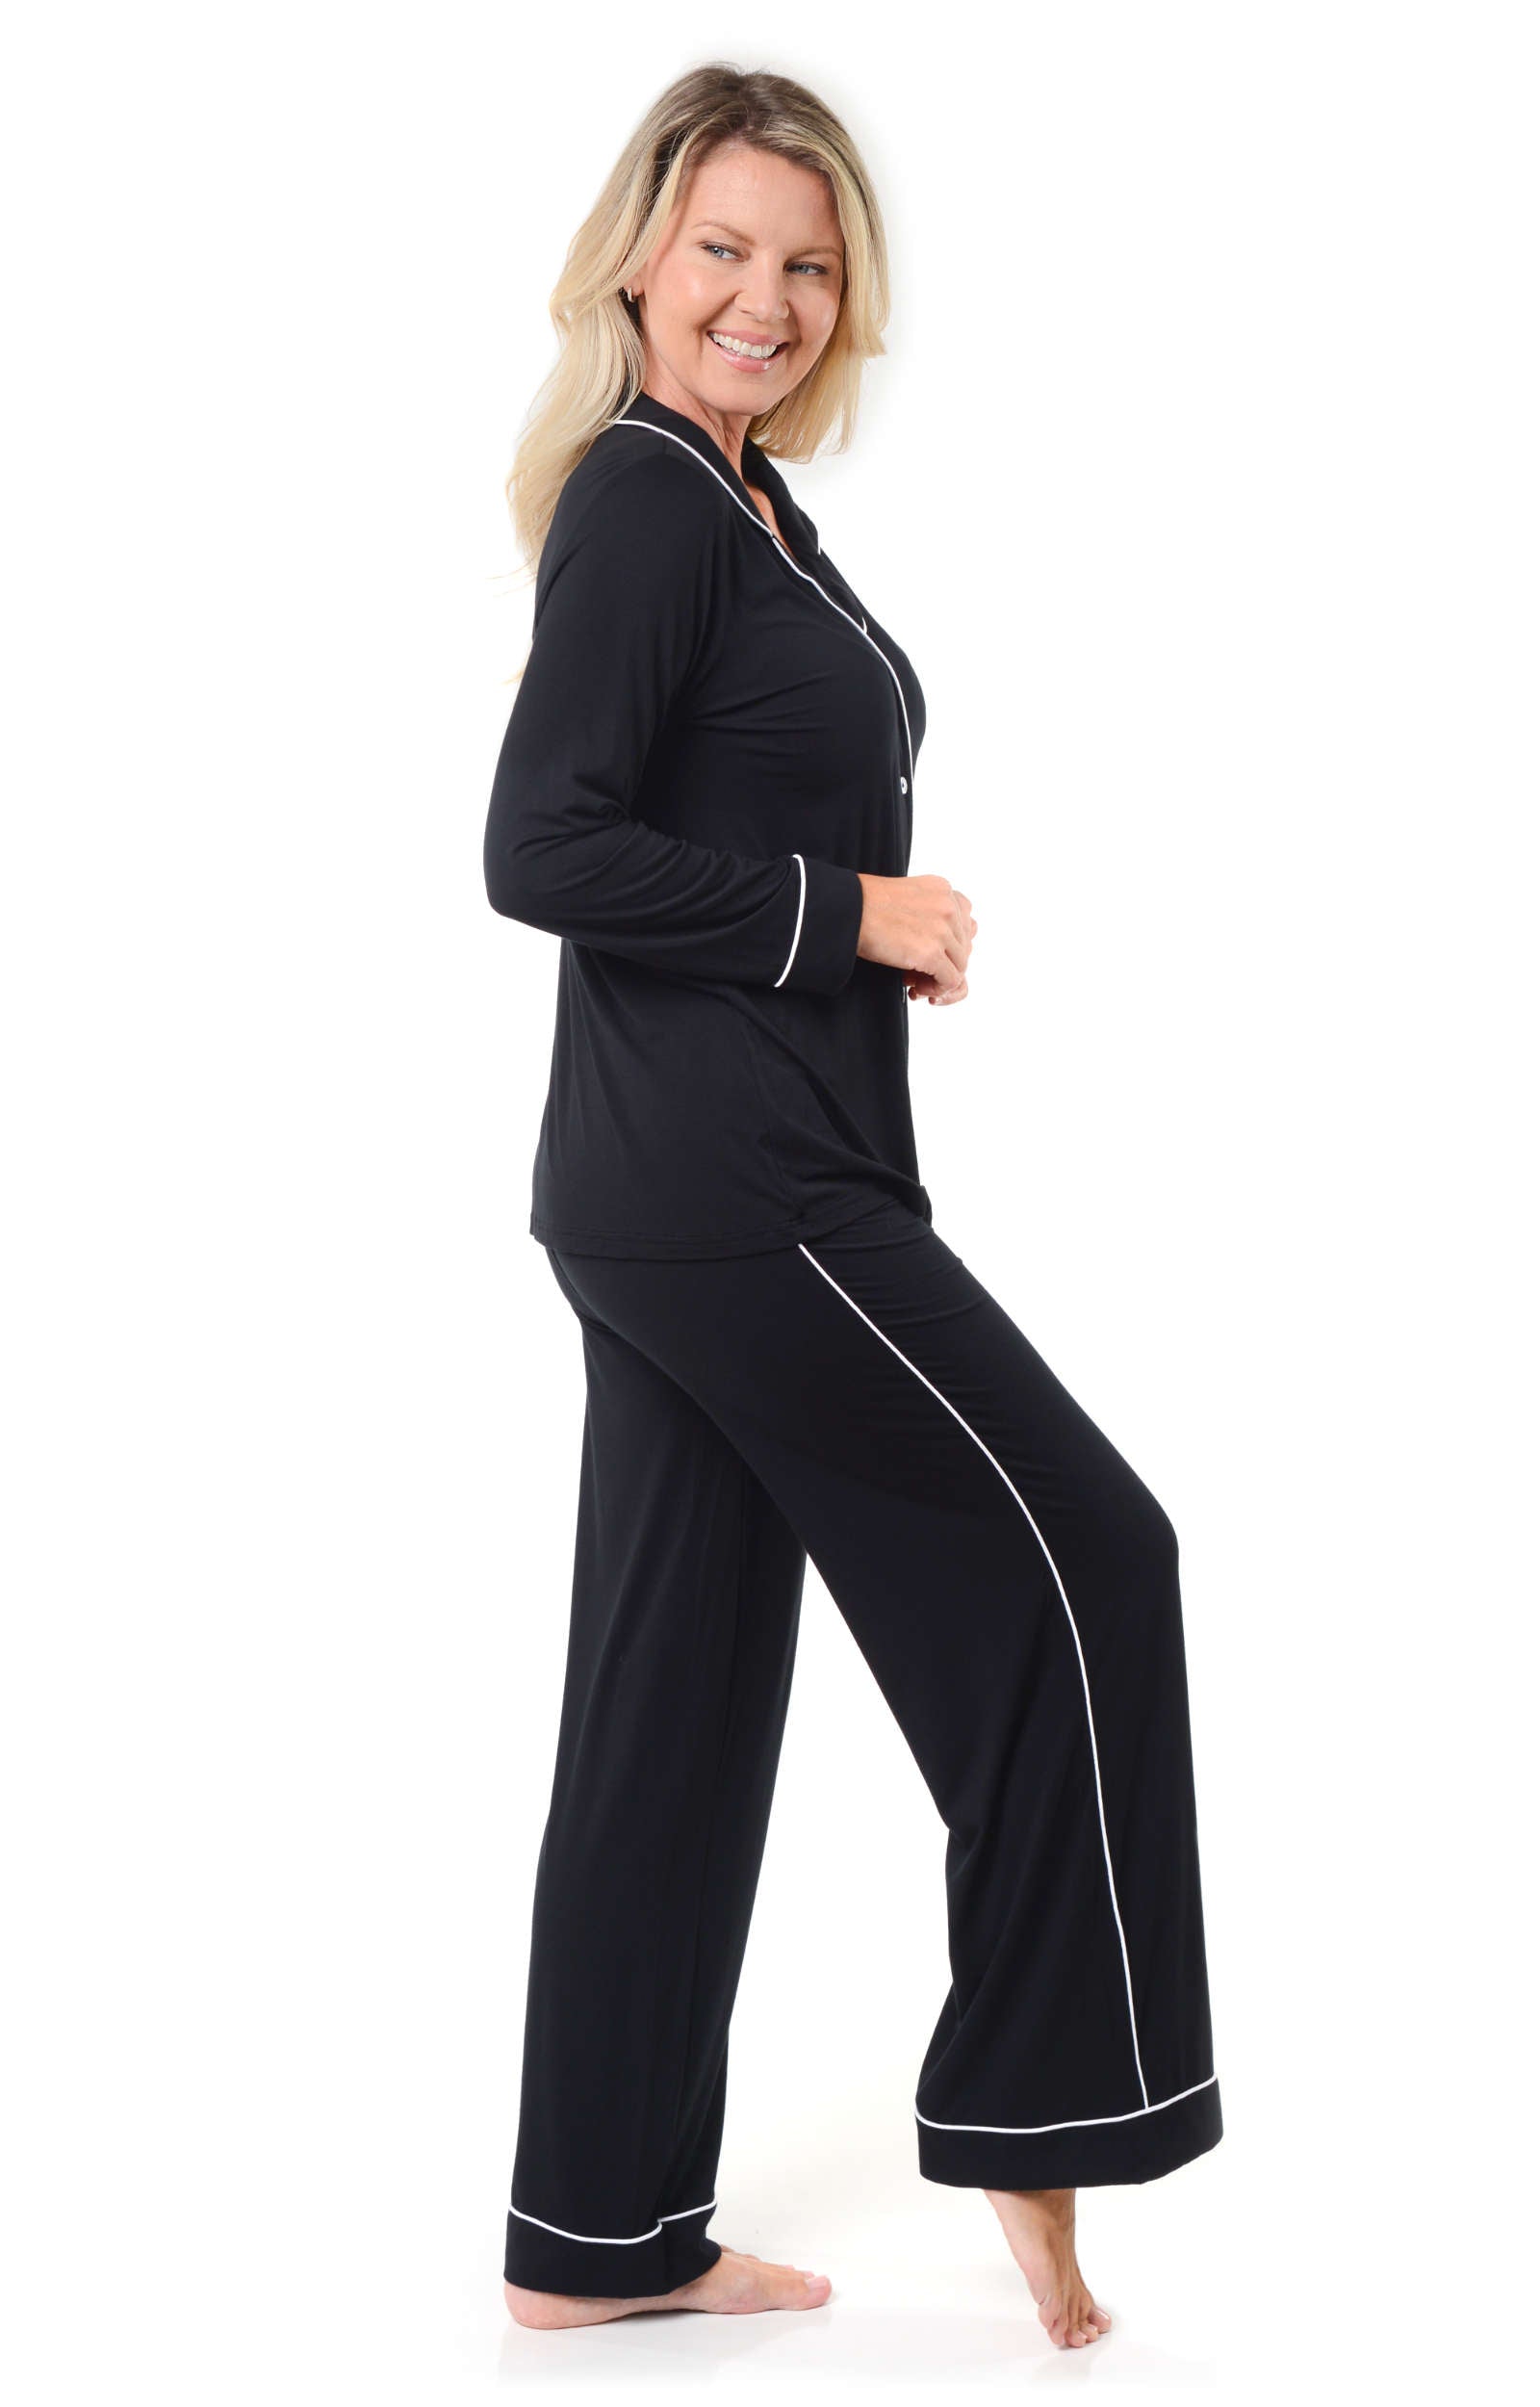 Womens Pajama Set 95% Cotton 5% Spandex Long Sleeve Sleepwear Top & Pants 2  Piece Pj's Set Turquoise XS - 2XL